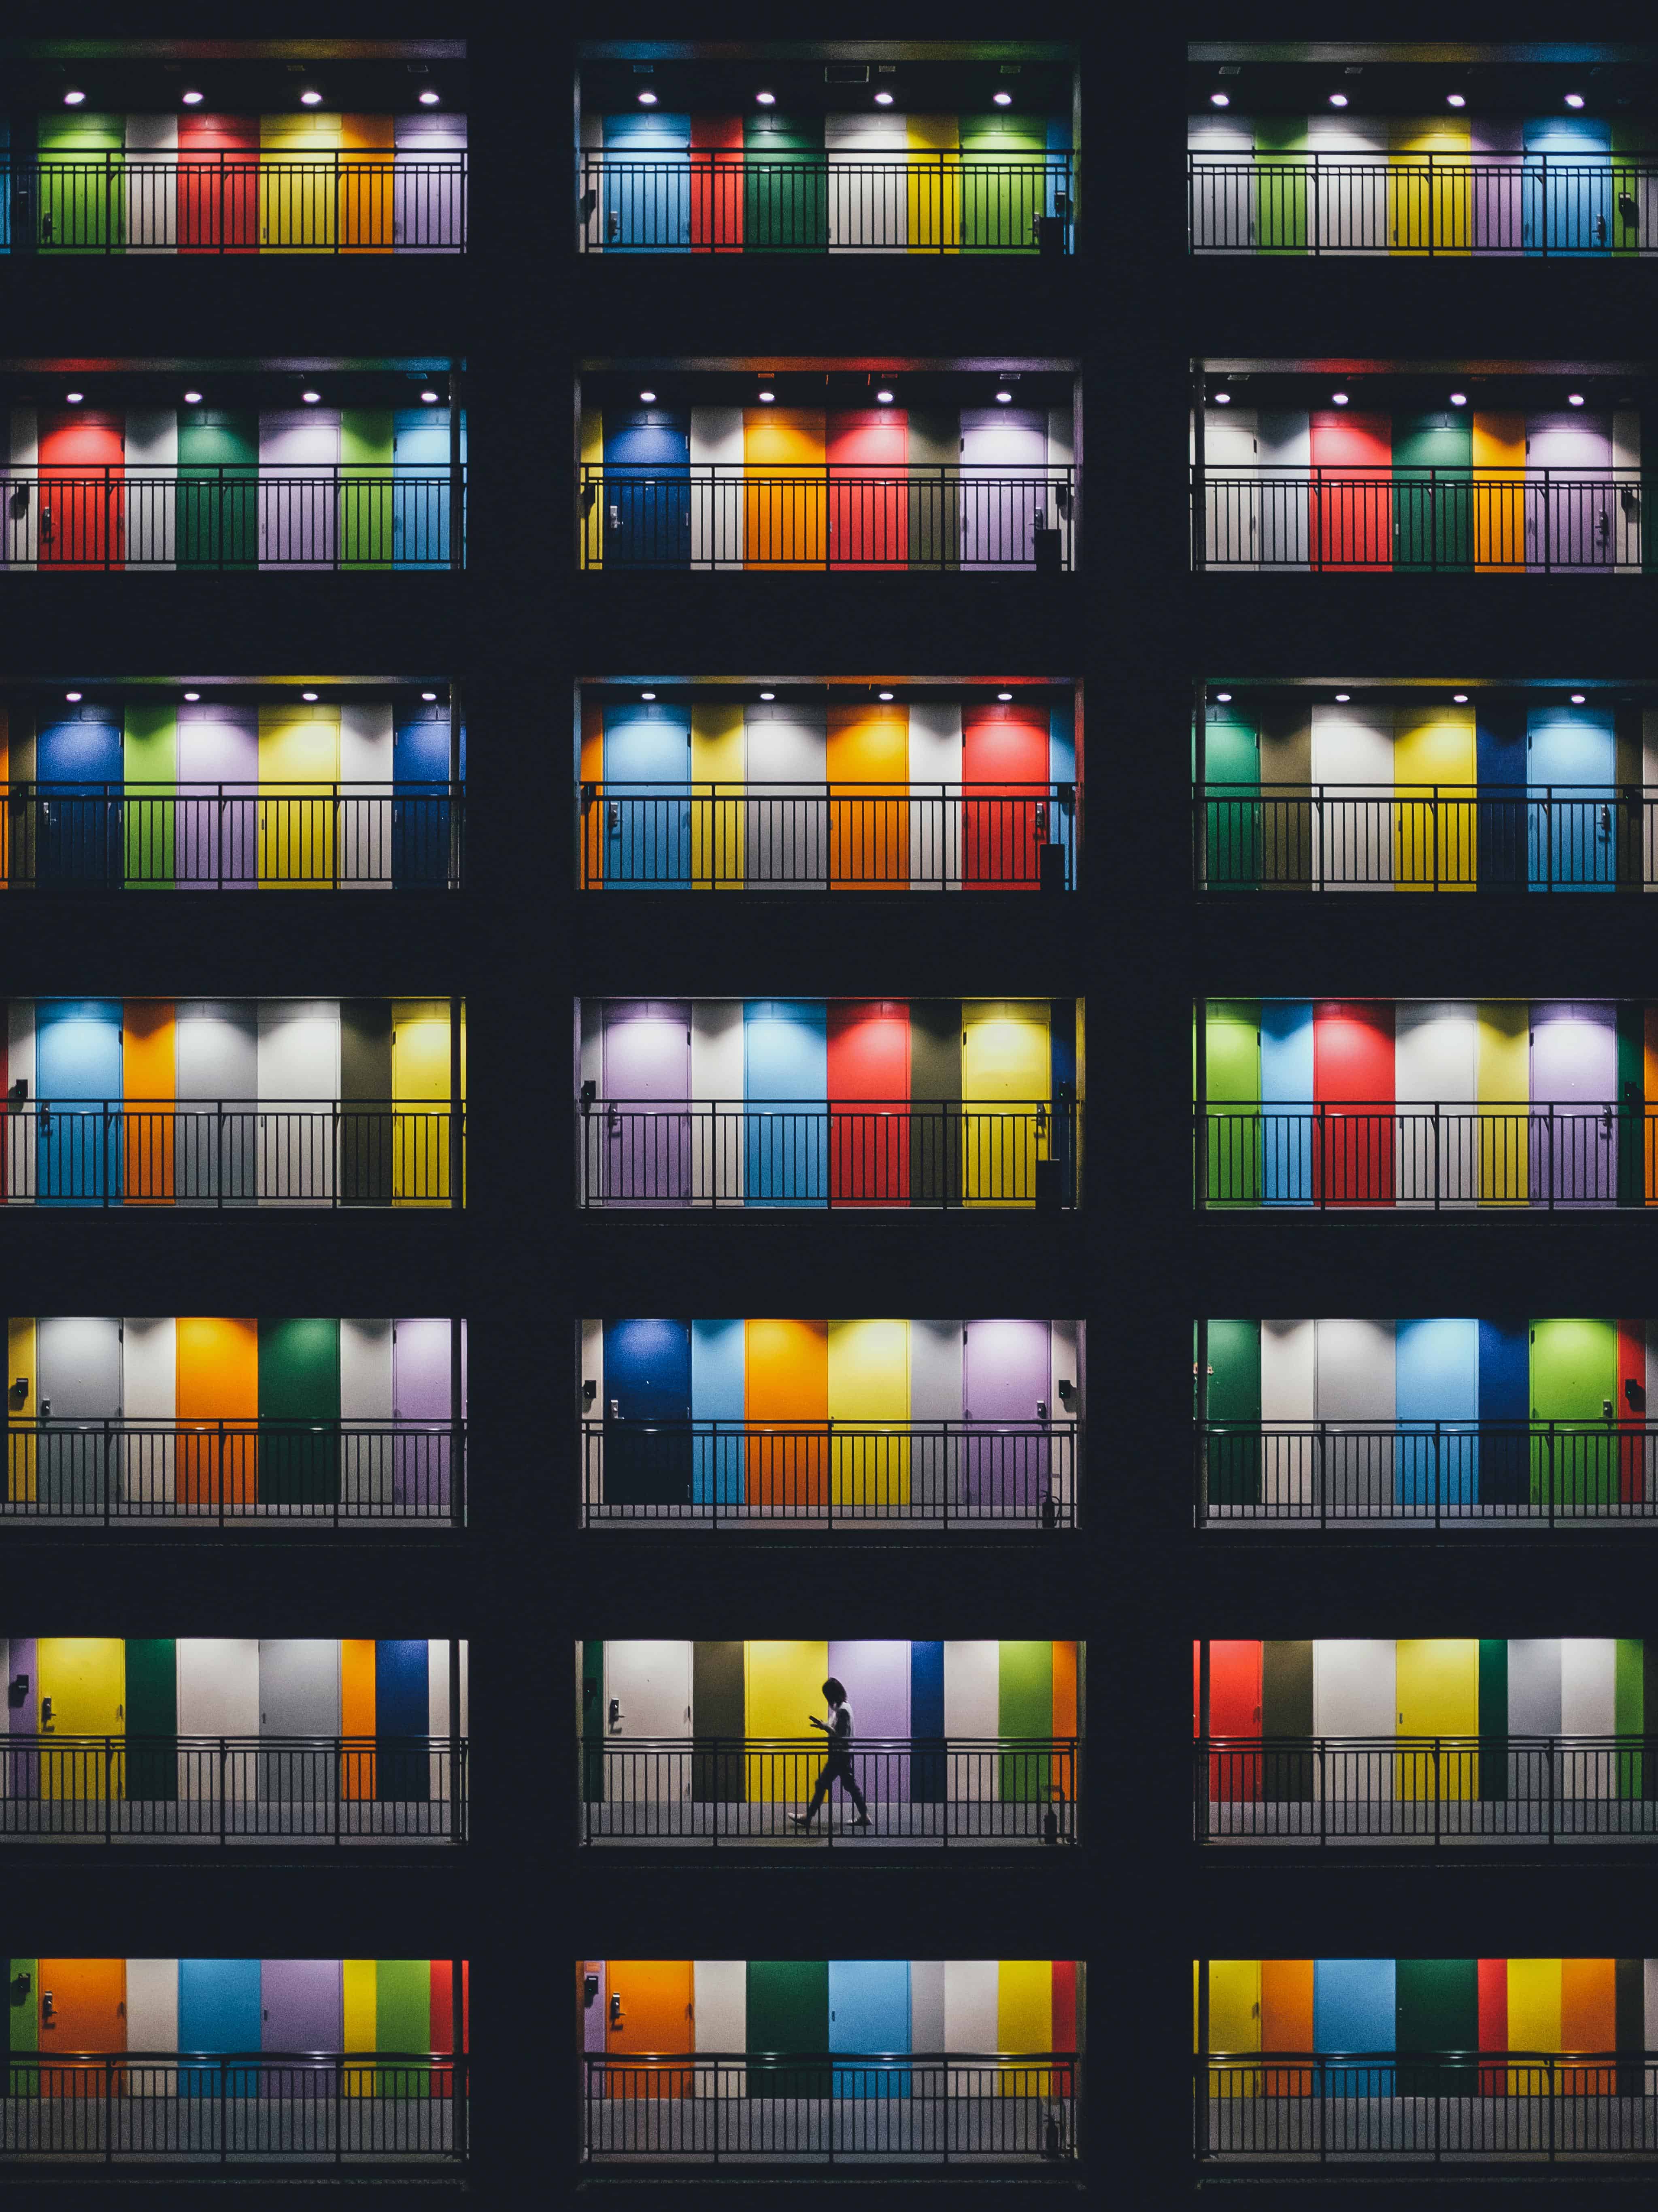 ipad pro stock wallpapers,colorfulness,shelf,pattern,glass,display case